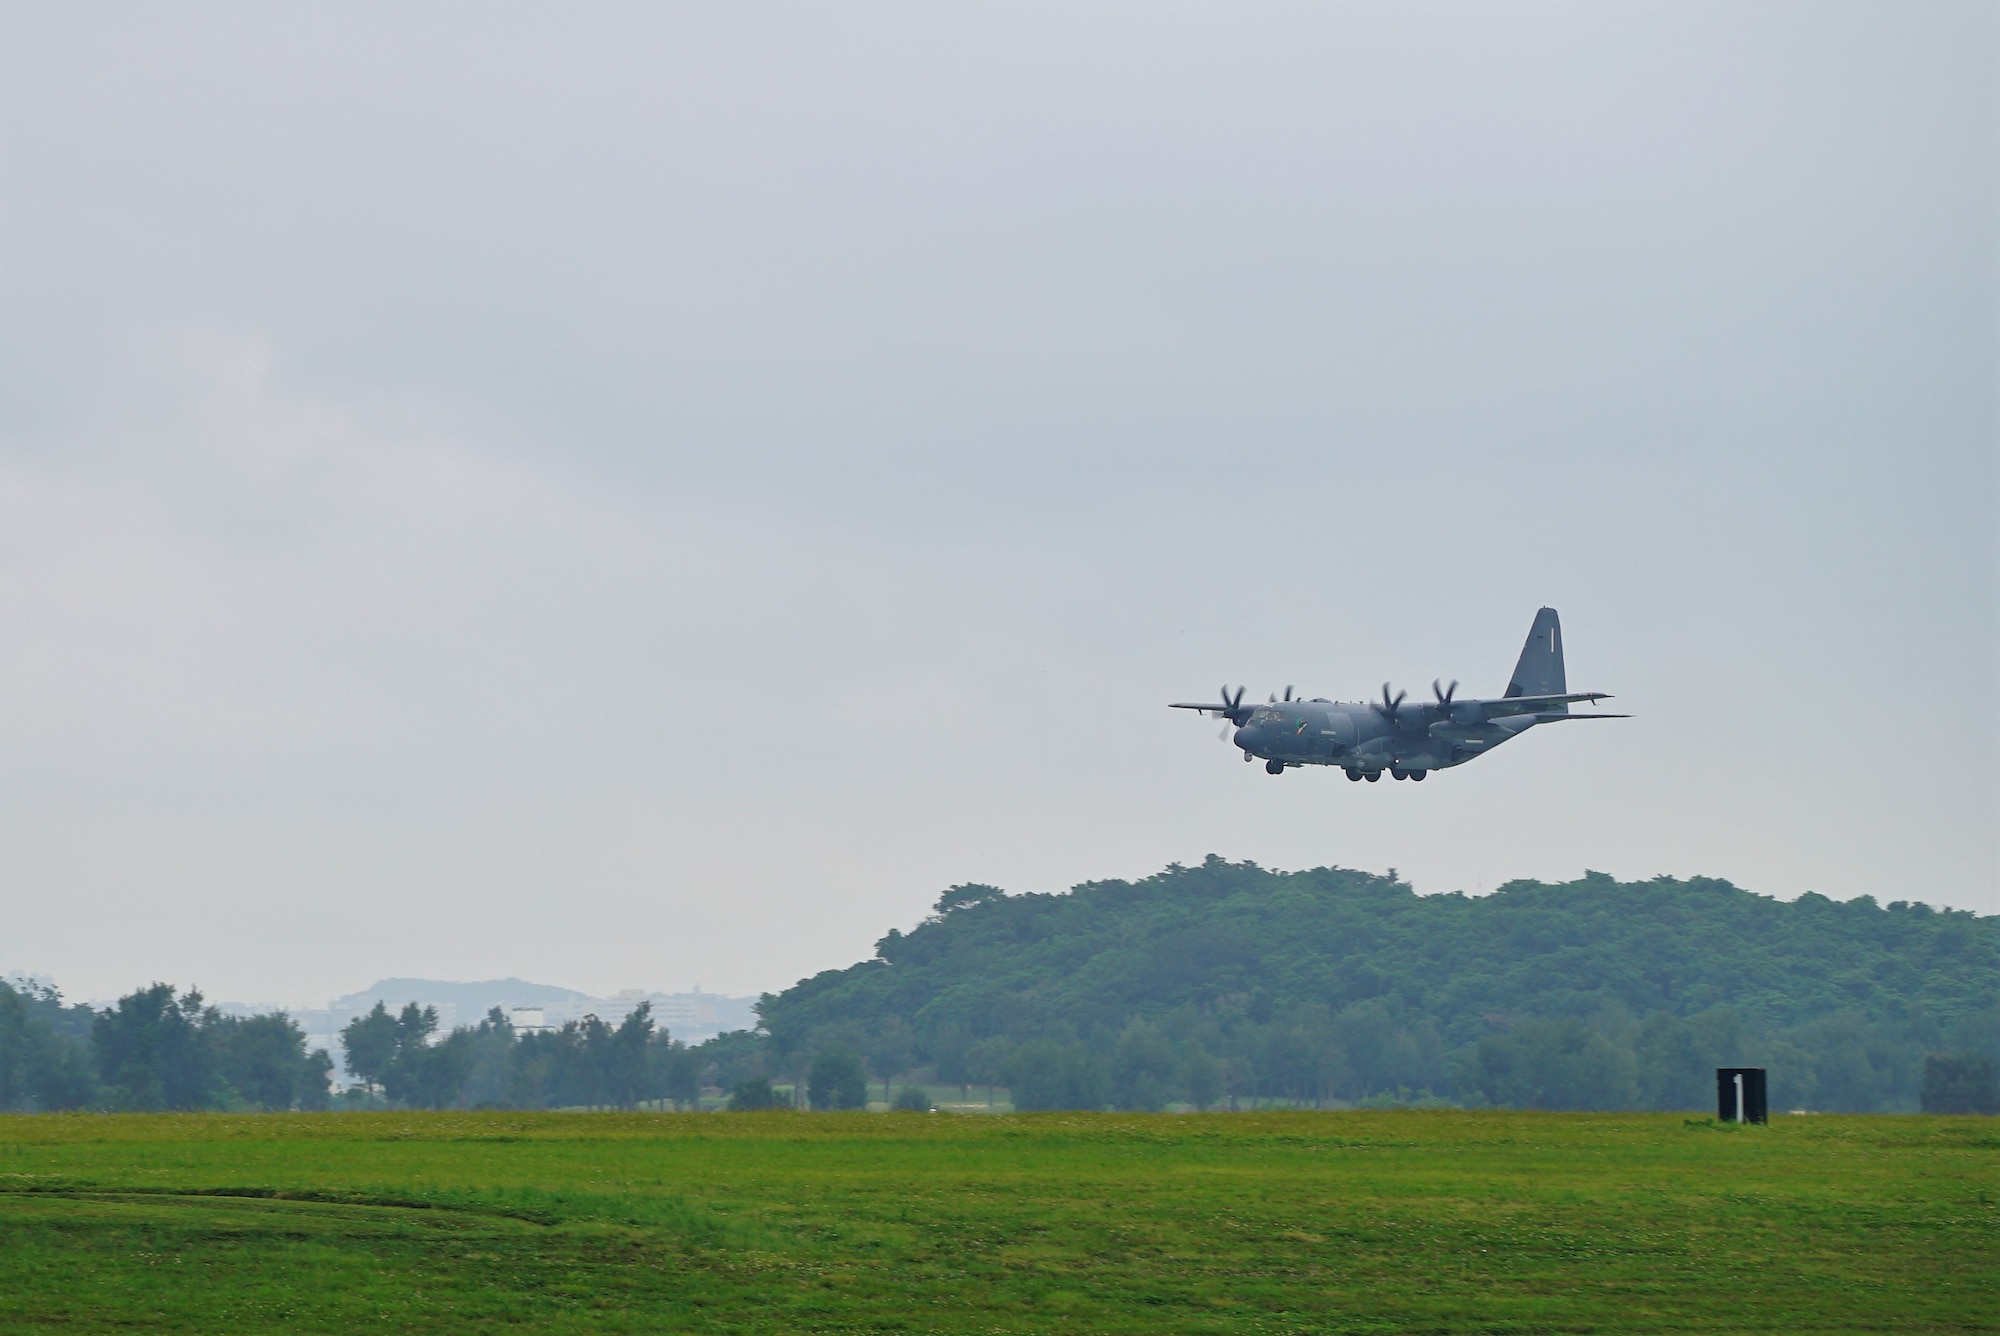 An AC-130J Ghostrider approaches the runway on a final landing at Kadena Air Base.